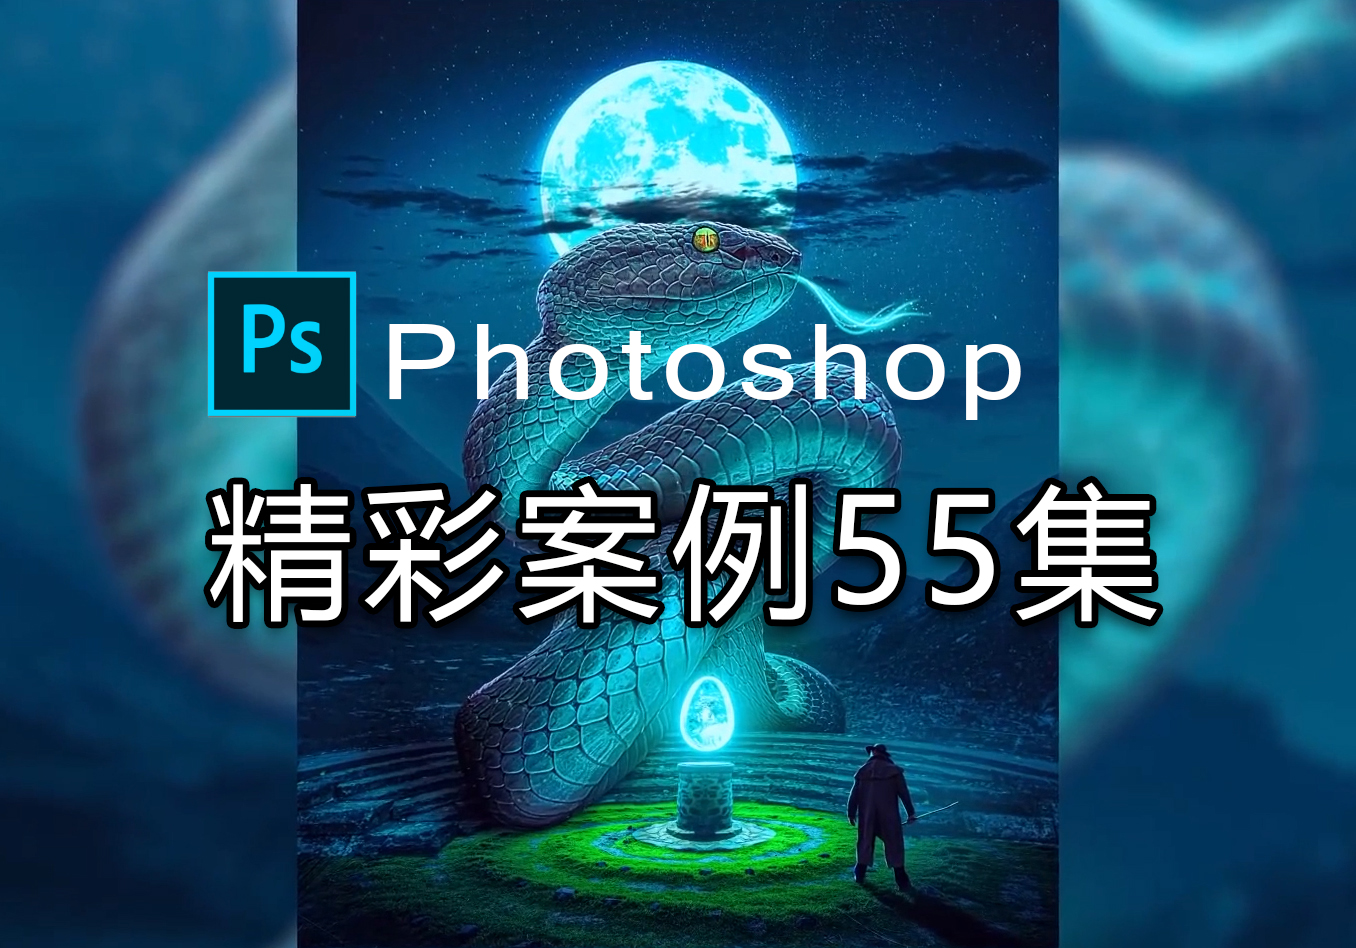 photoshop精彩案例55集教程下载